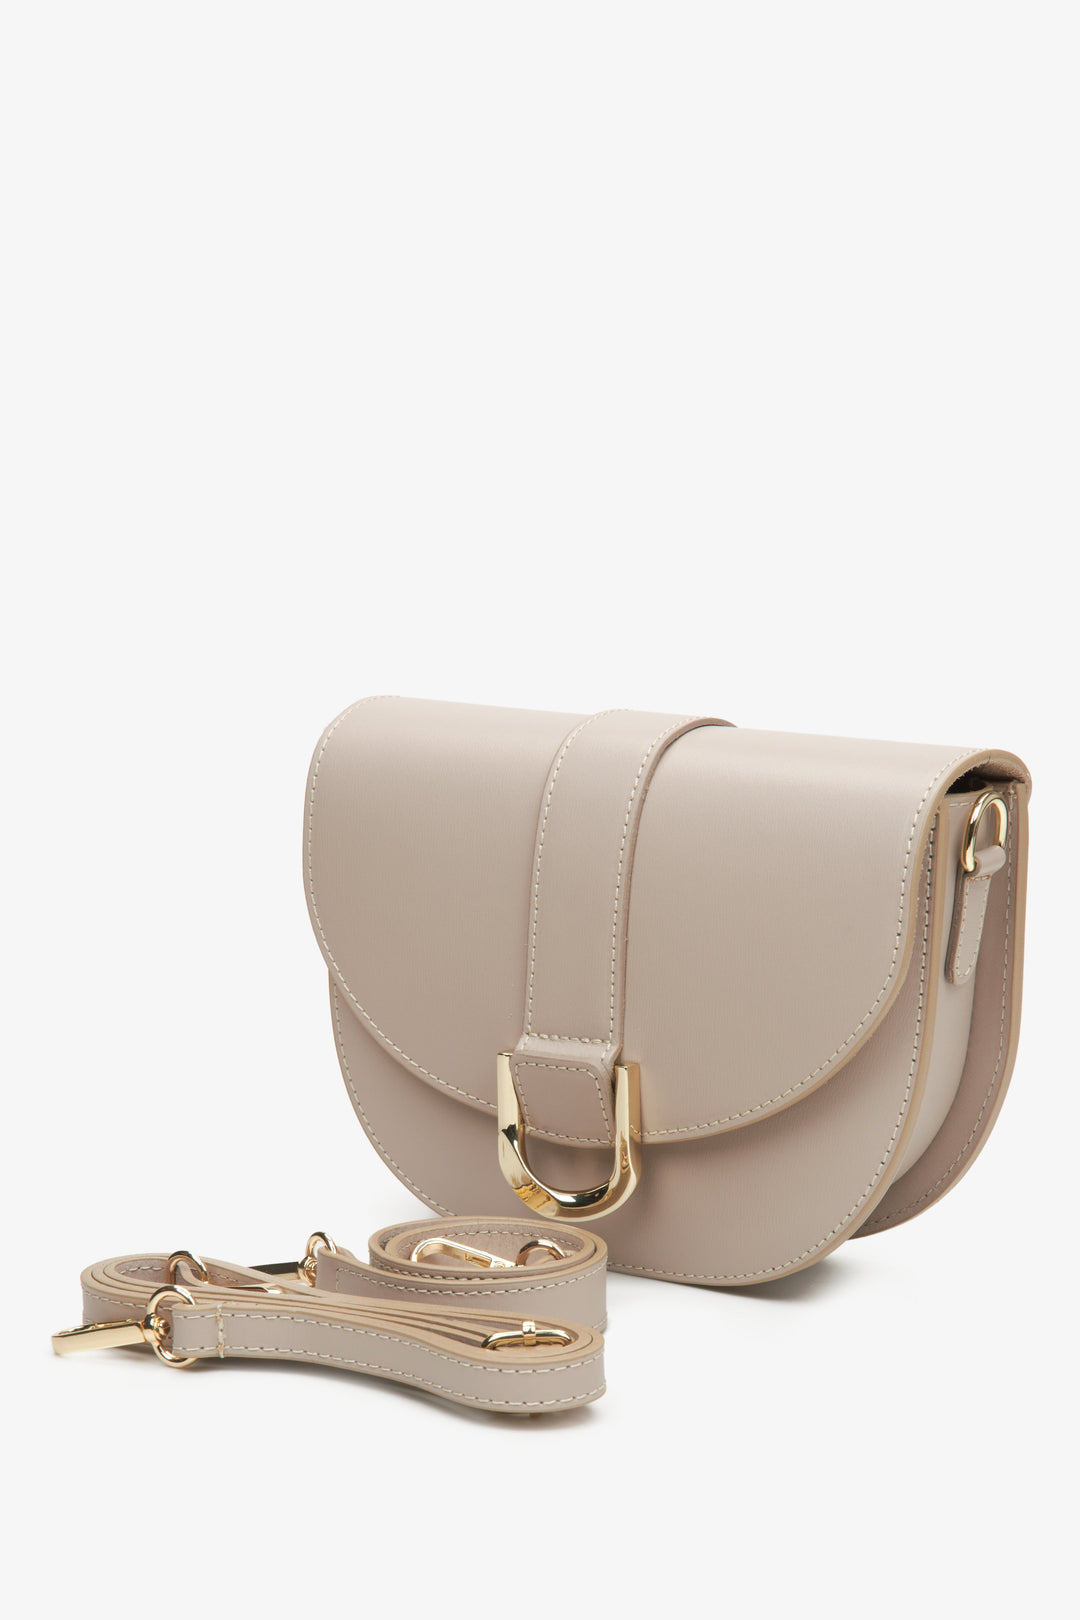 Estro women's beige leather crescent-shaped handbag.